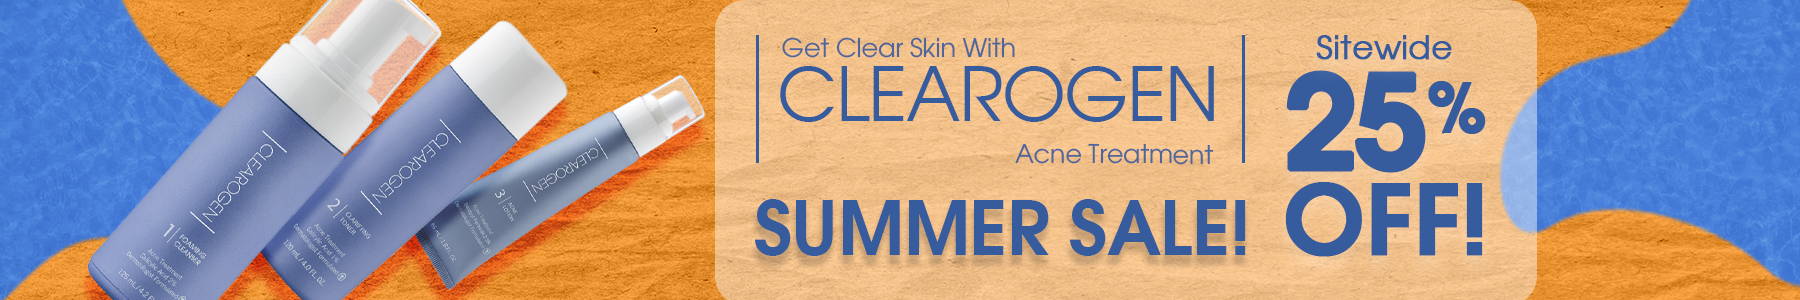 Clearogen summer sale - save 25% off sitewide!